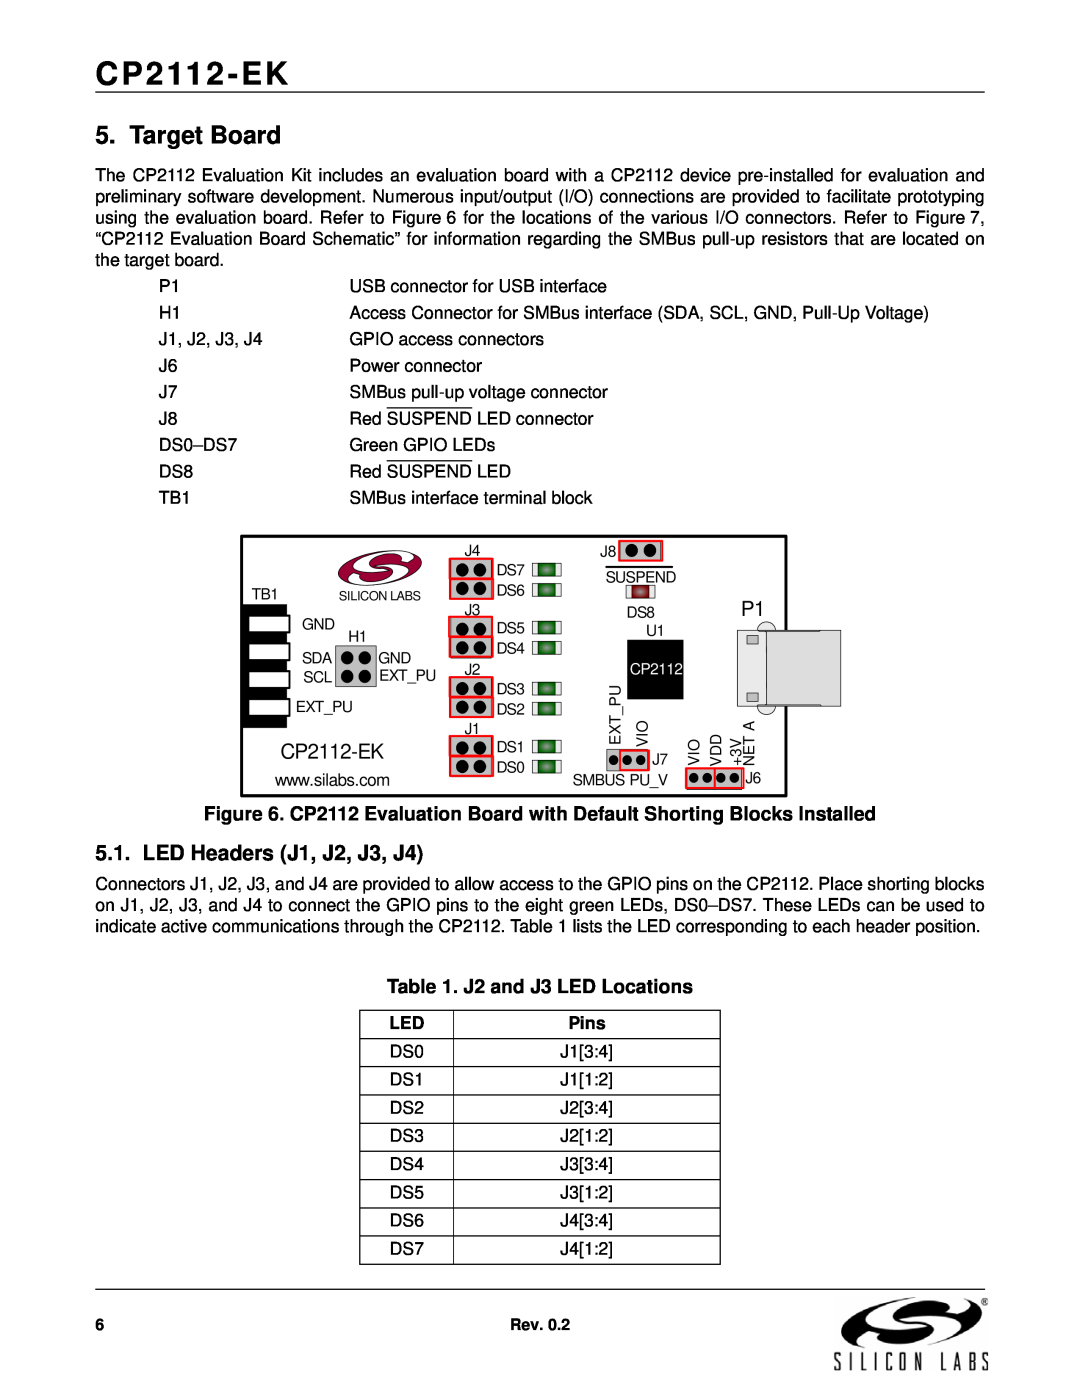 Silicon Laboratories CP2112-EK manual Target Board, LED Headers J1, J2, J3, J4, J2 and J3 LED Locations, Pins 